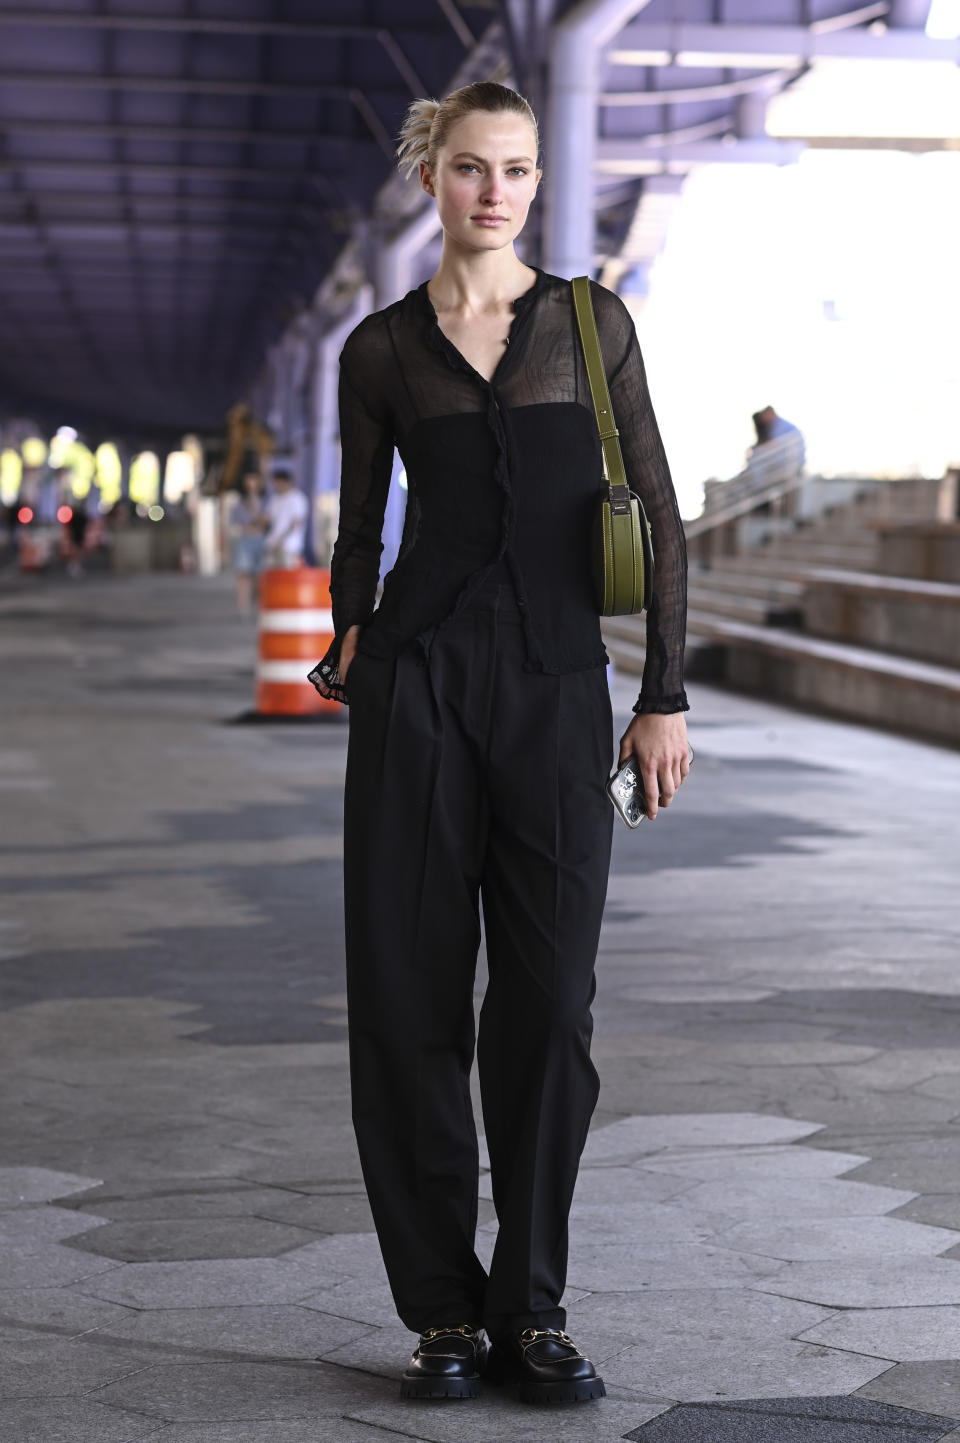 woman in black pants, tank top, and sheer shirt